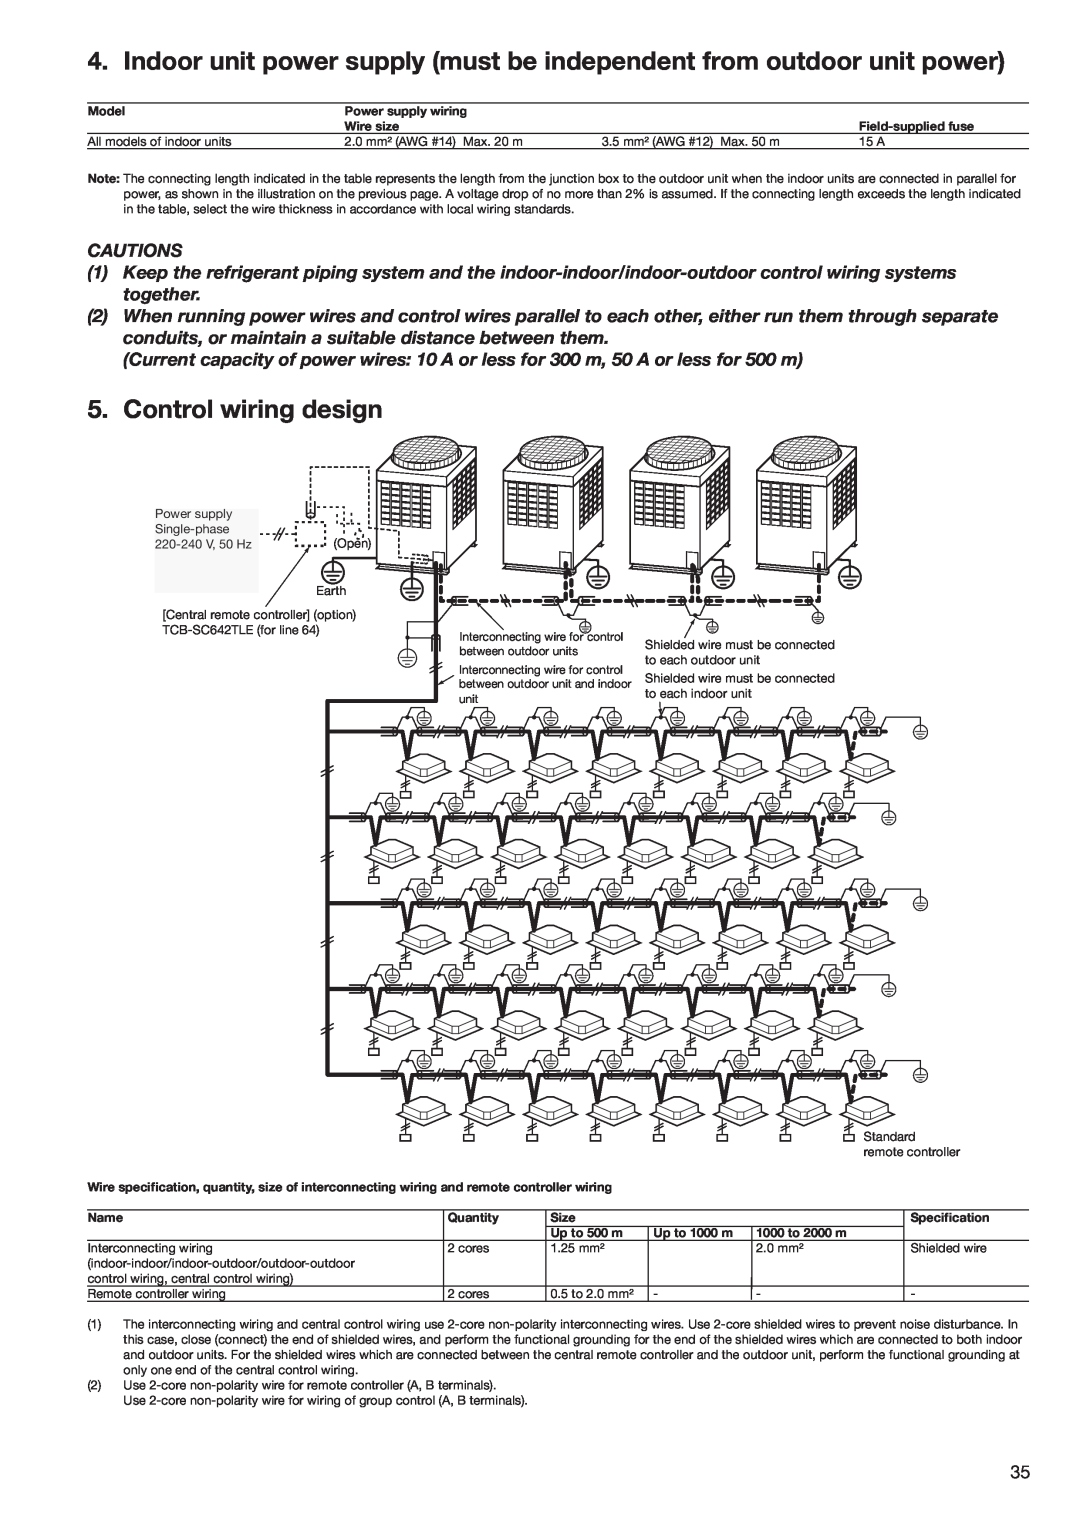 Toshiba HFC R-410A manual Control wiring design 